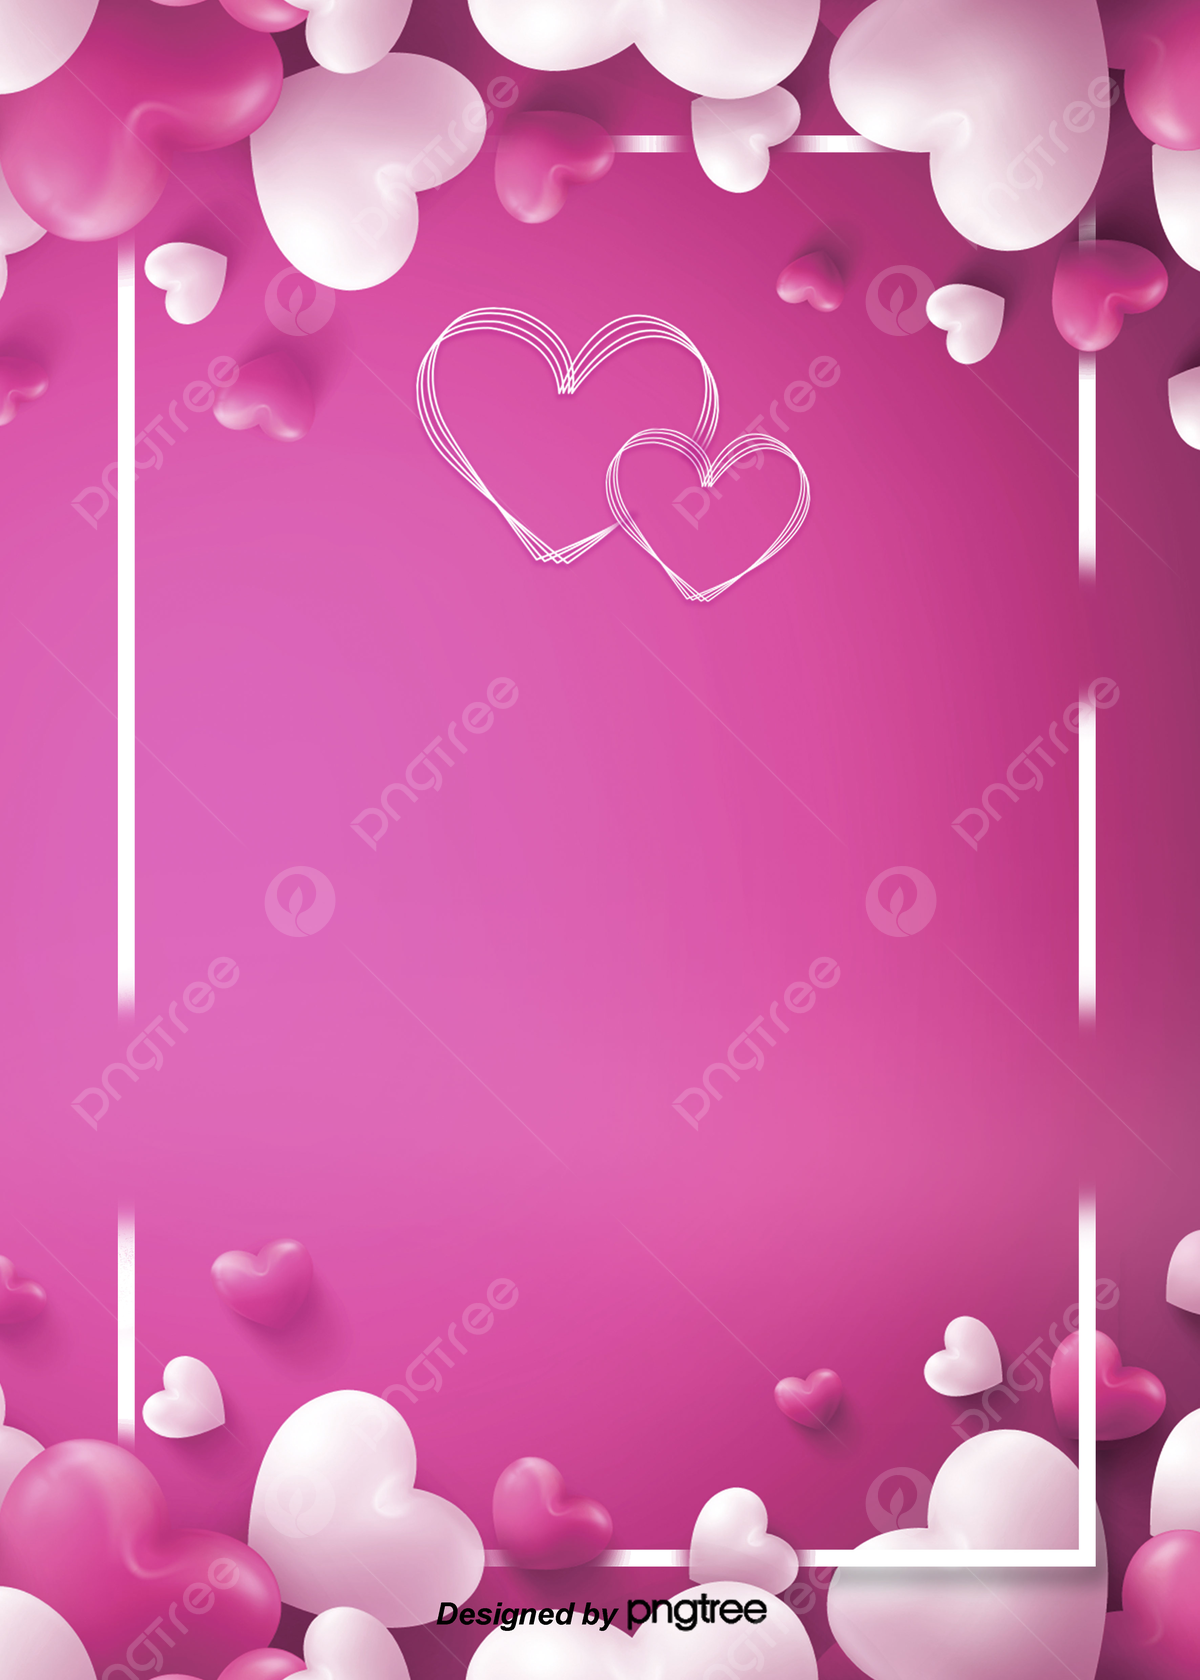 Simple love romantic balloon background balloon romantic love background image for free download